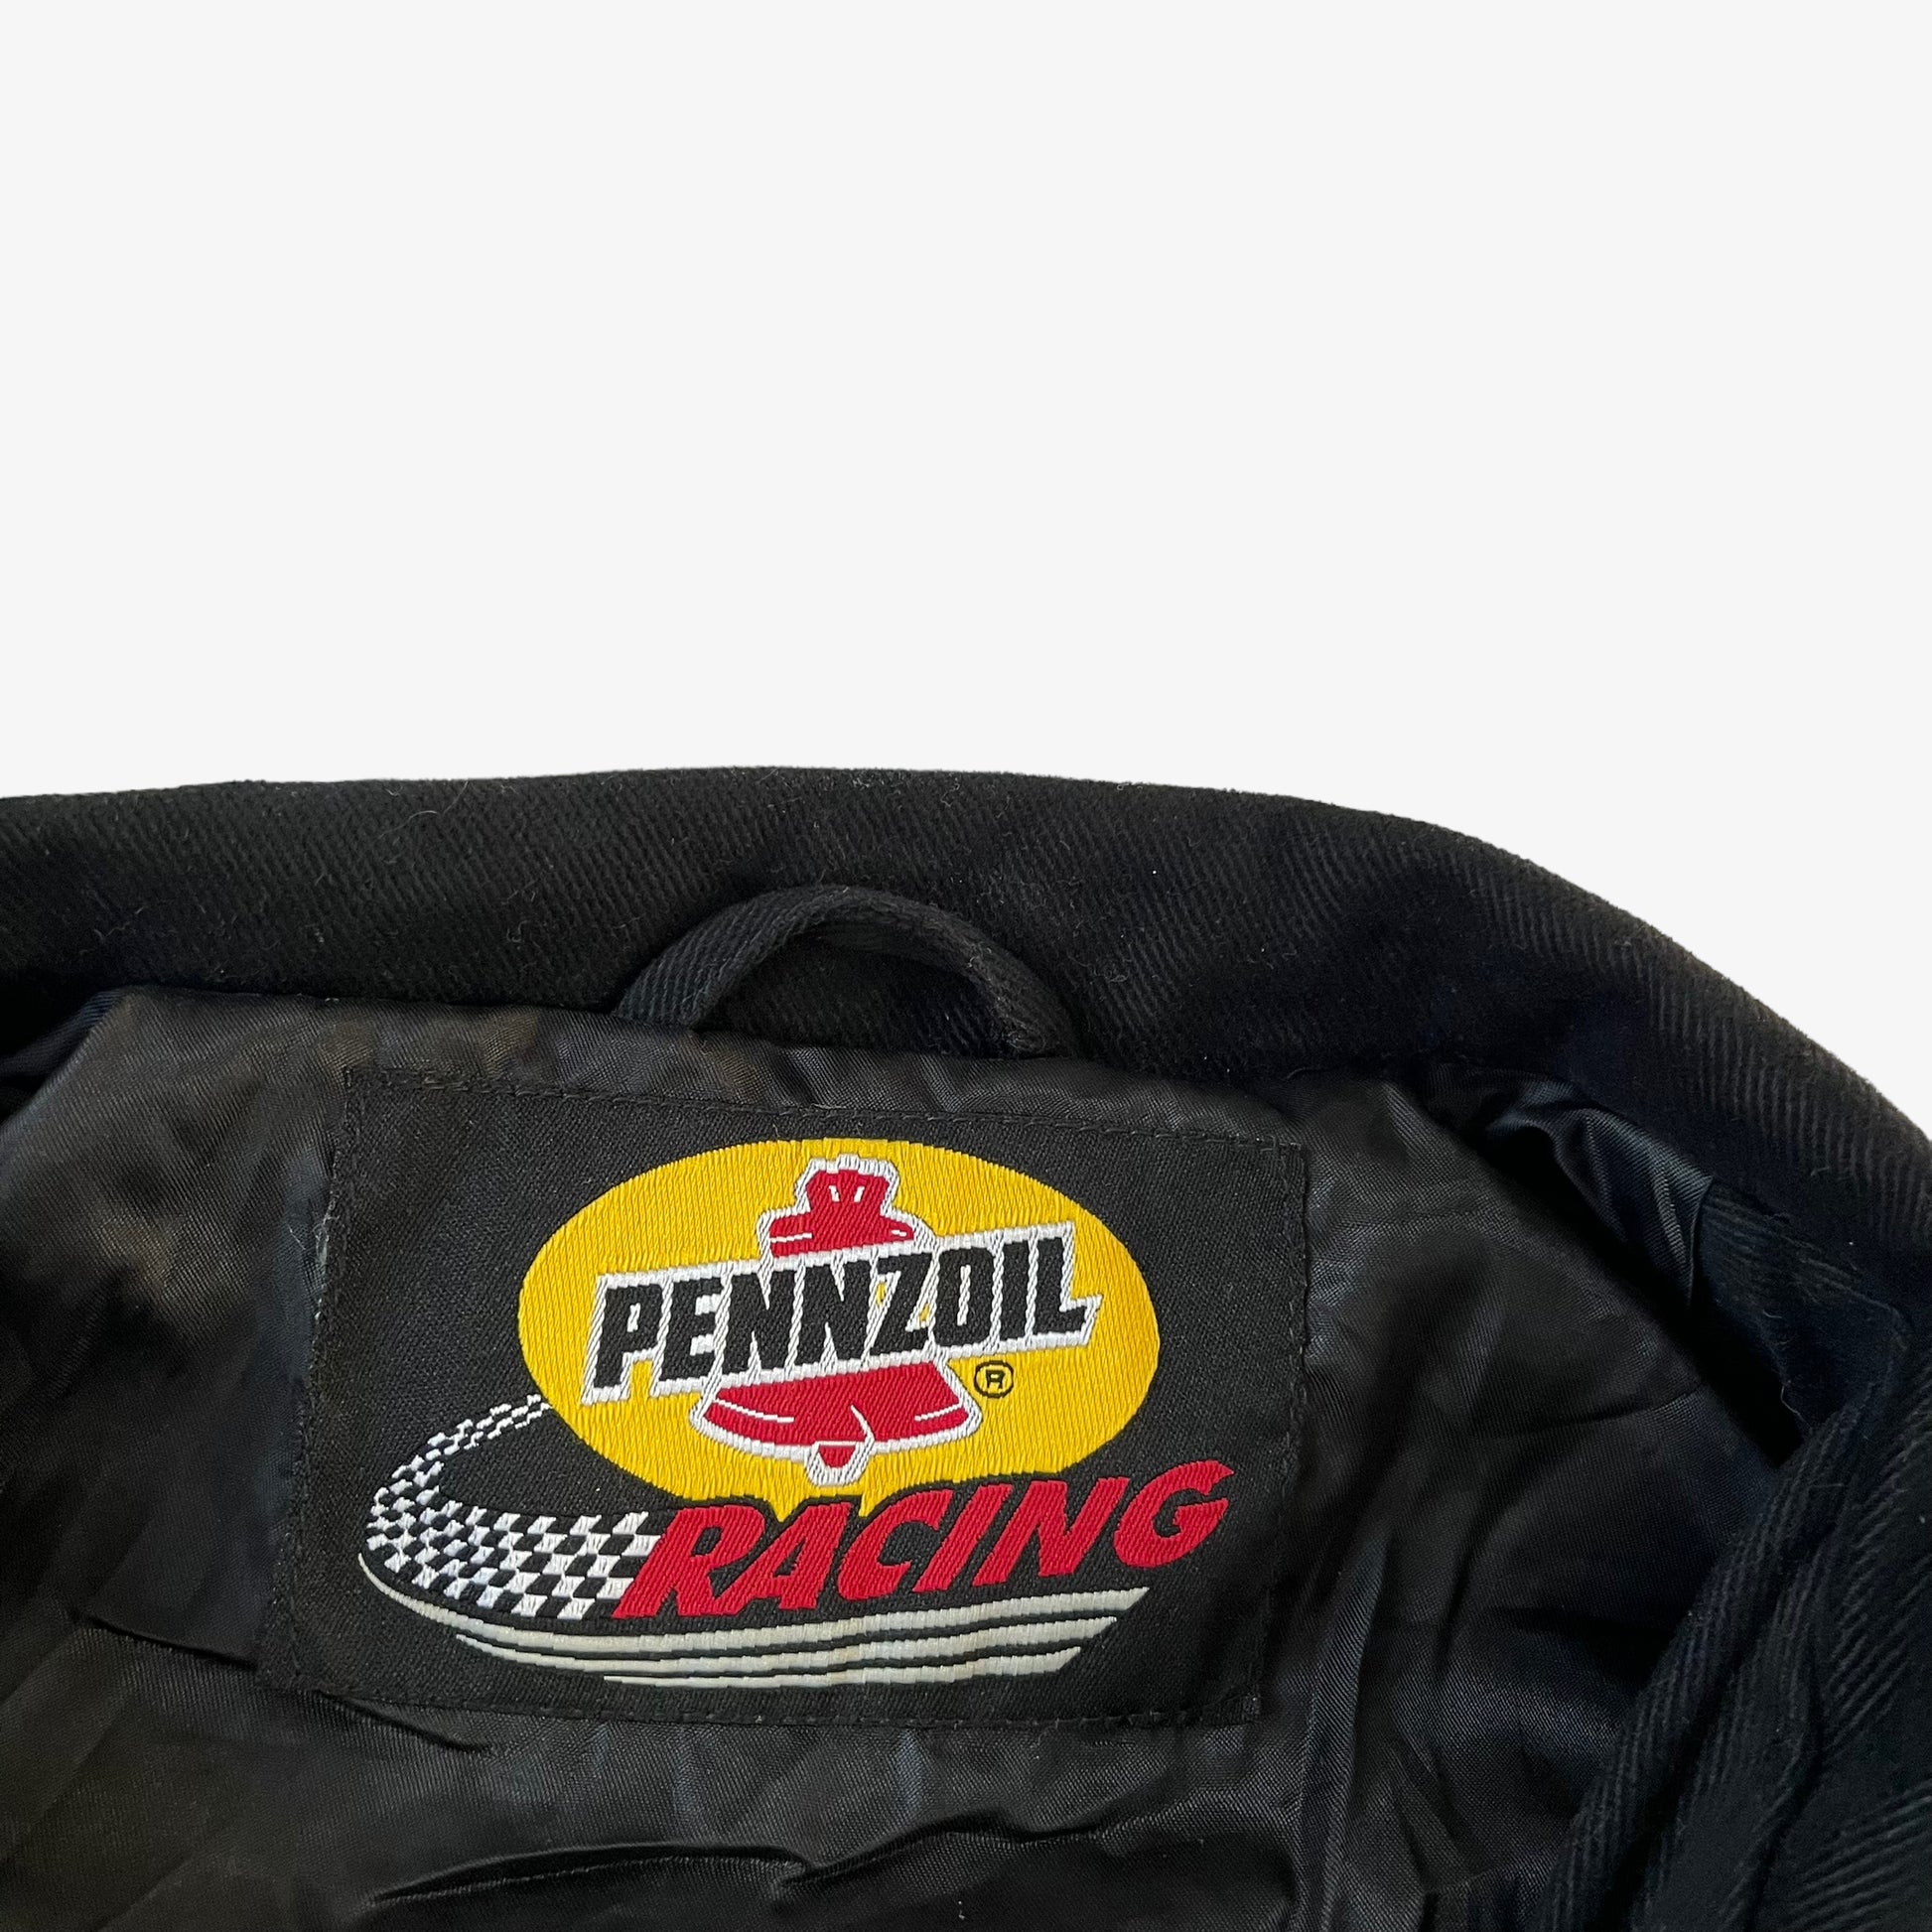 Vintage 90s Pennzoil Racing Team Nascar Jacket Label - Casspios Dream